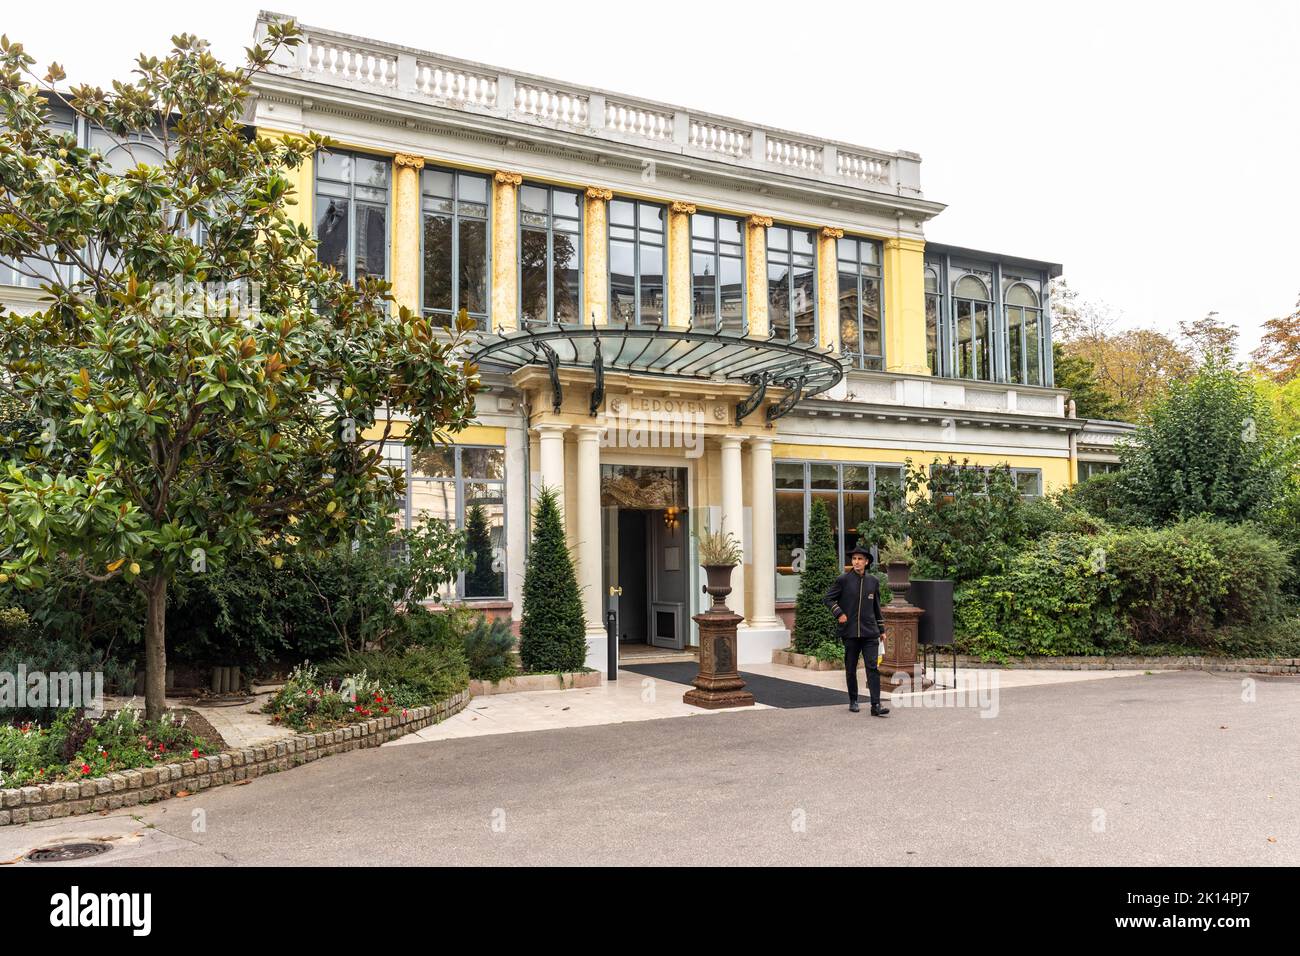 Pavillon Ledoyen a 3 Michelin star restaurant in the  Champs - Élysées gardens, Paris, France, Europe Stock Photo